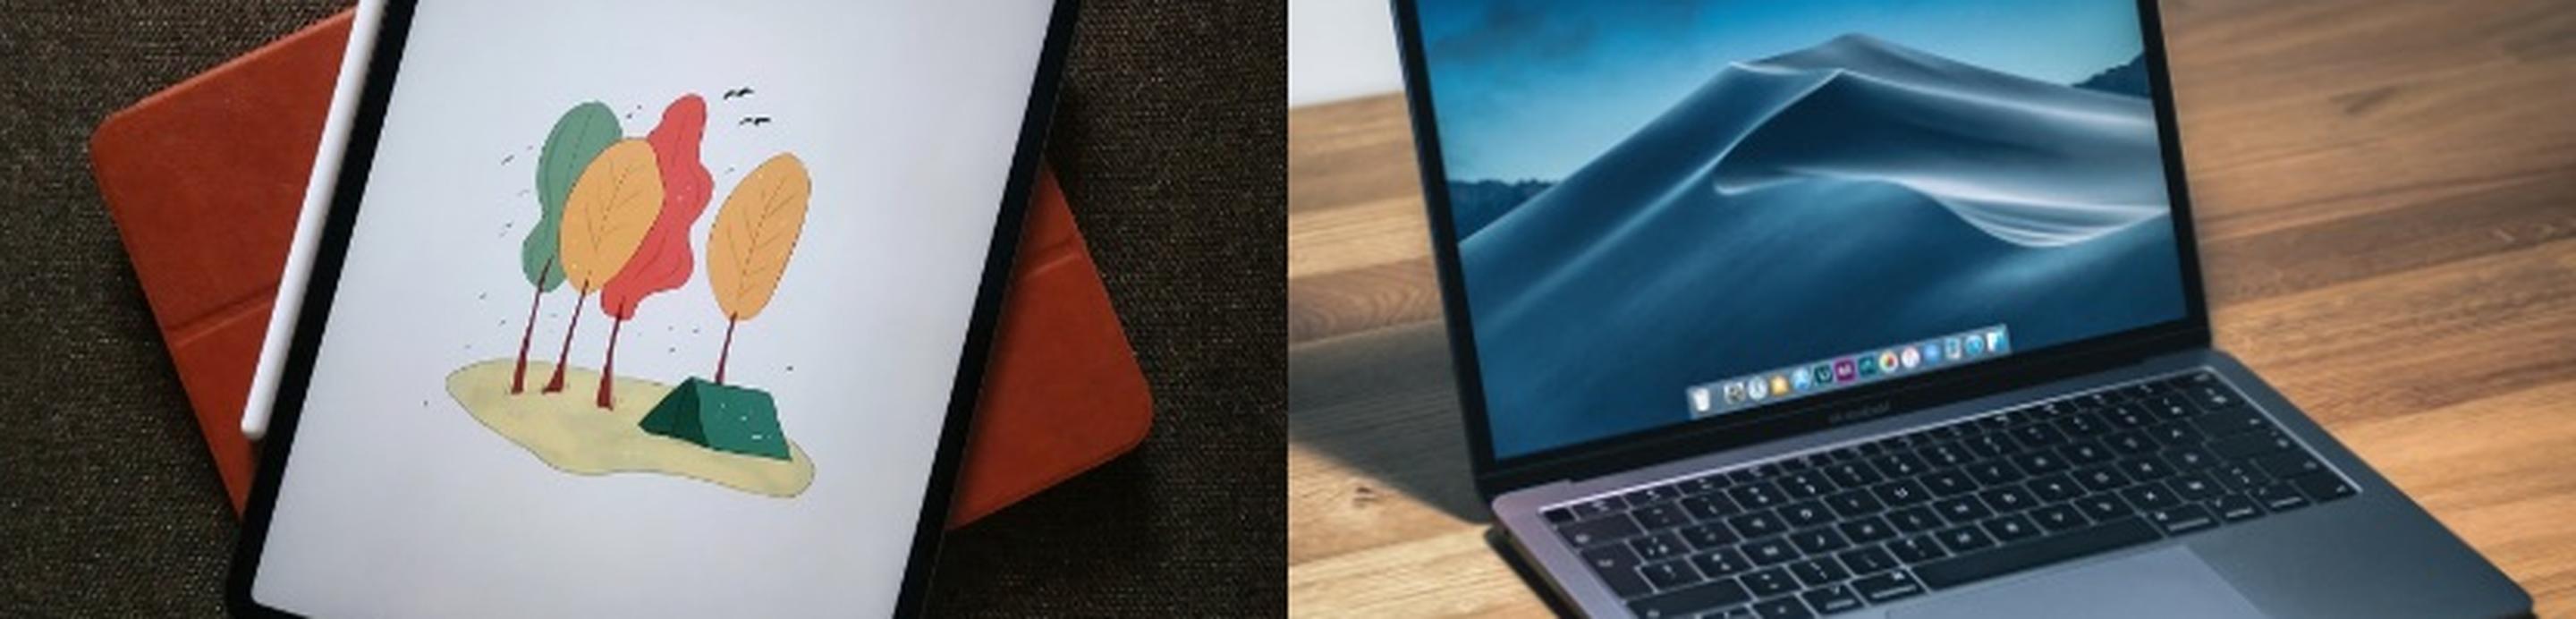 ipad-vs-macbook